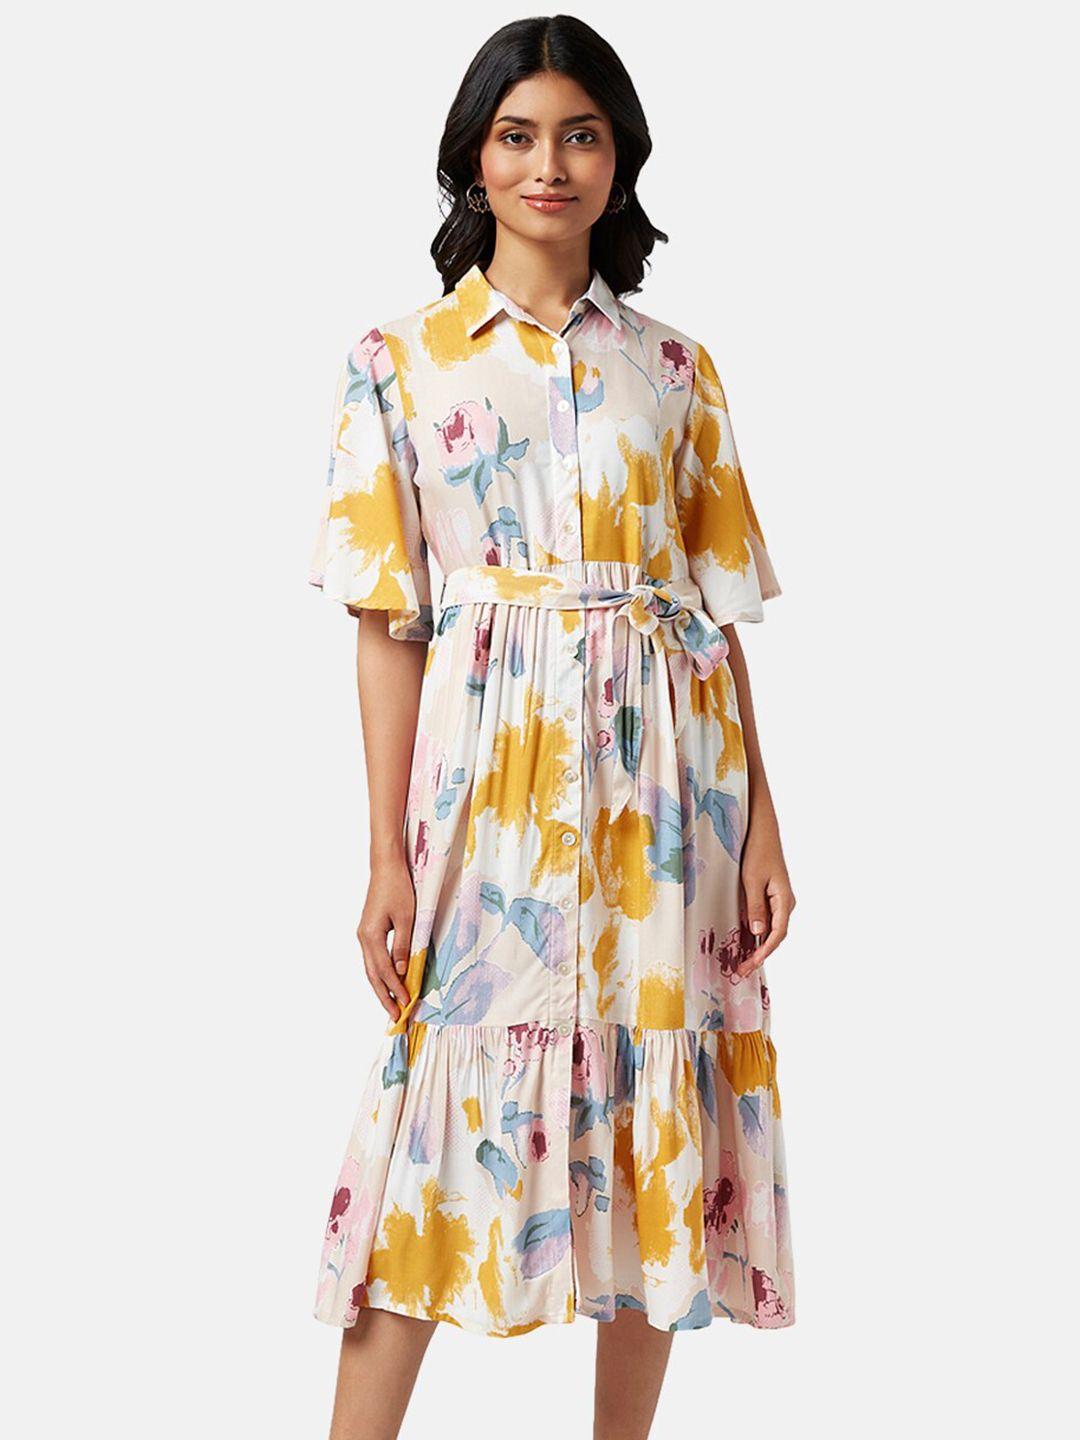 akkriti by pantaloons floral shirt midi dress